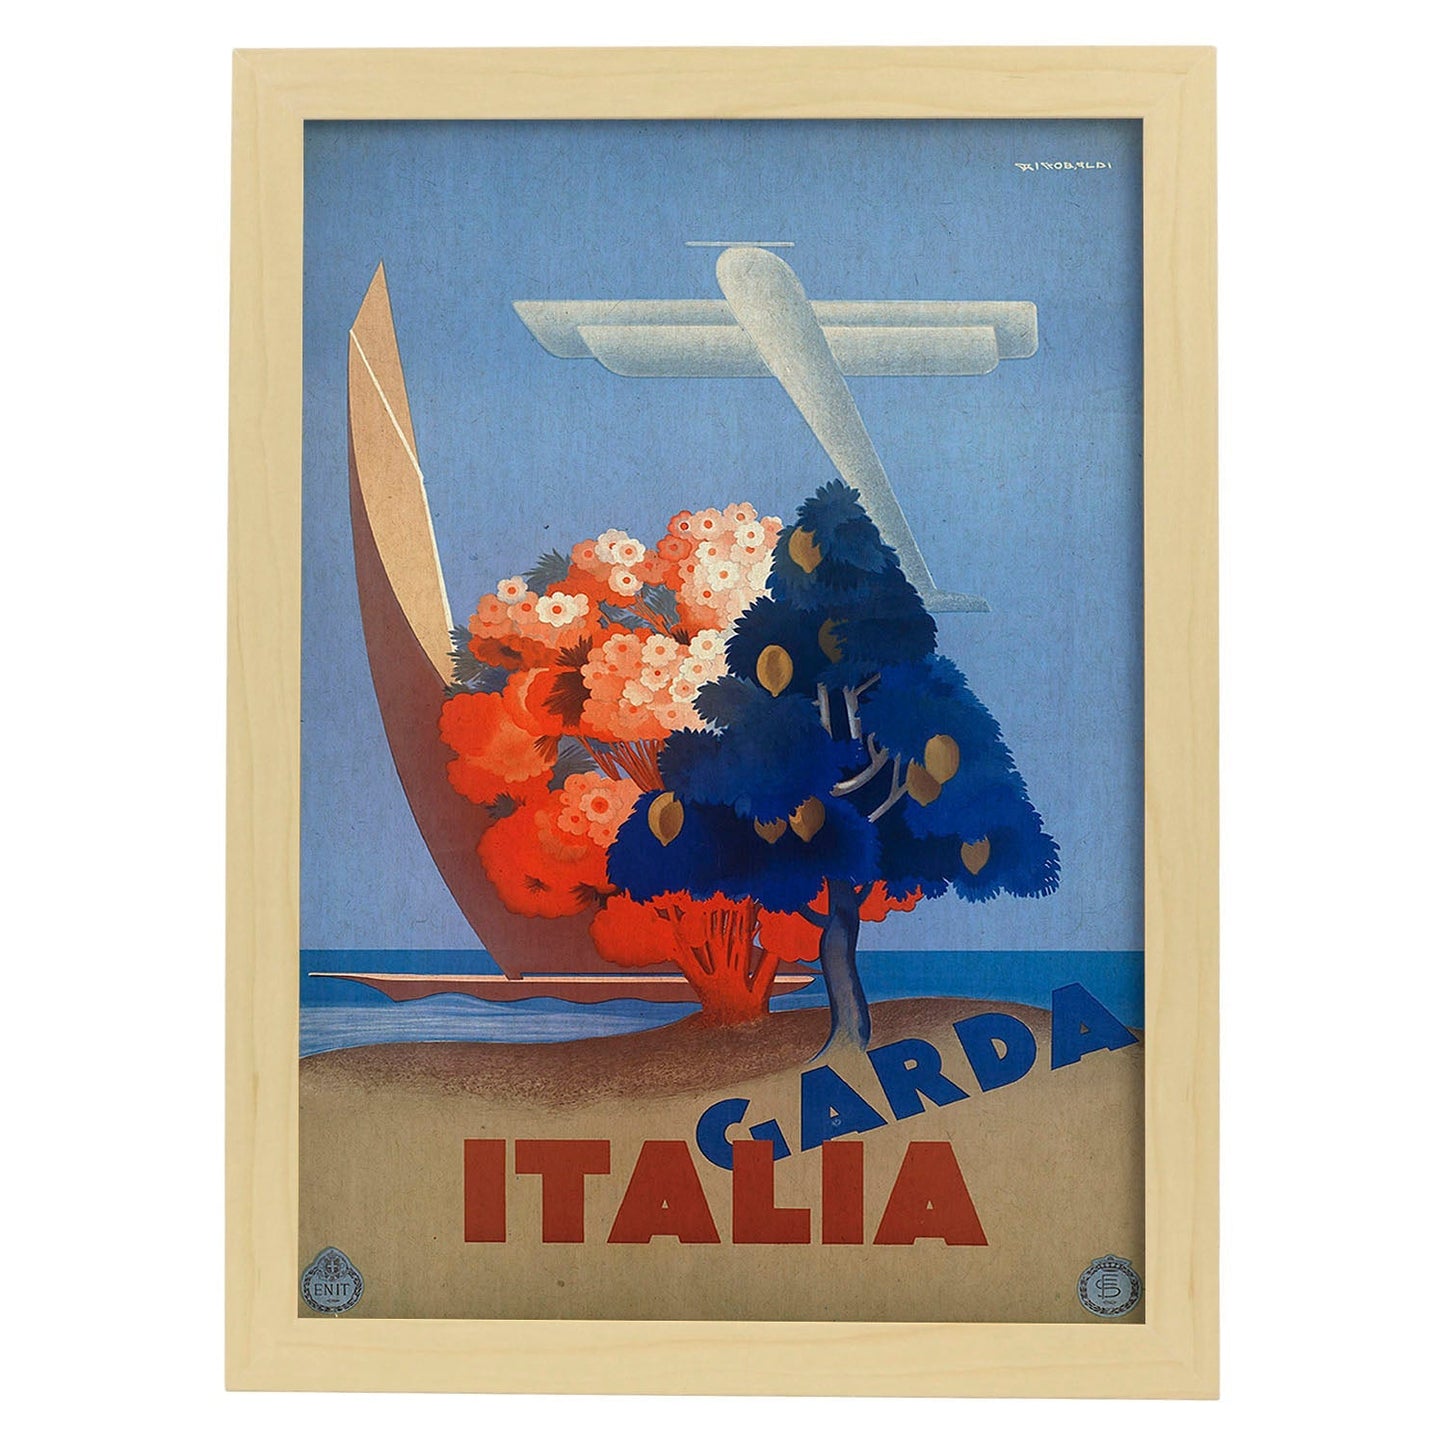 Poster vintage. Cartel vintage de Francia e Italia. Viaja a Grada.-Artwork-Nacnic-A4-Marco Madera clara-Nacnic Estudio SL